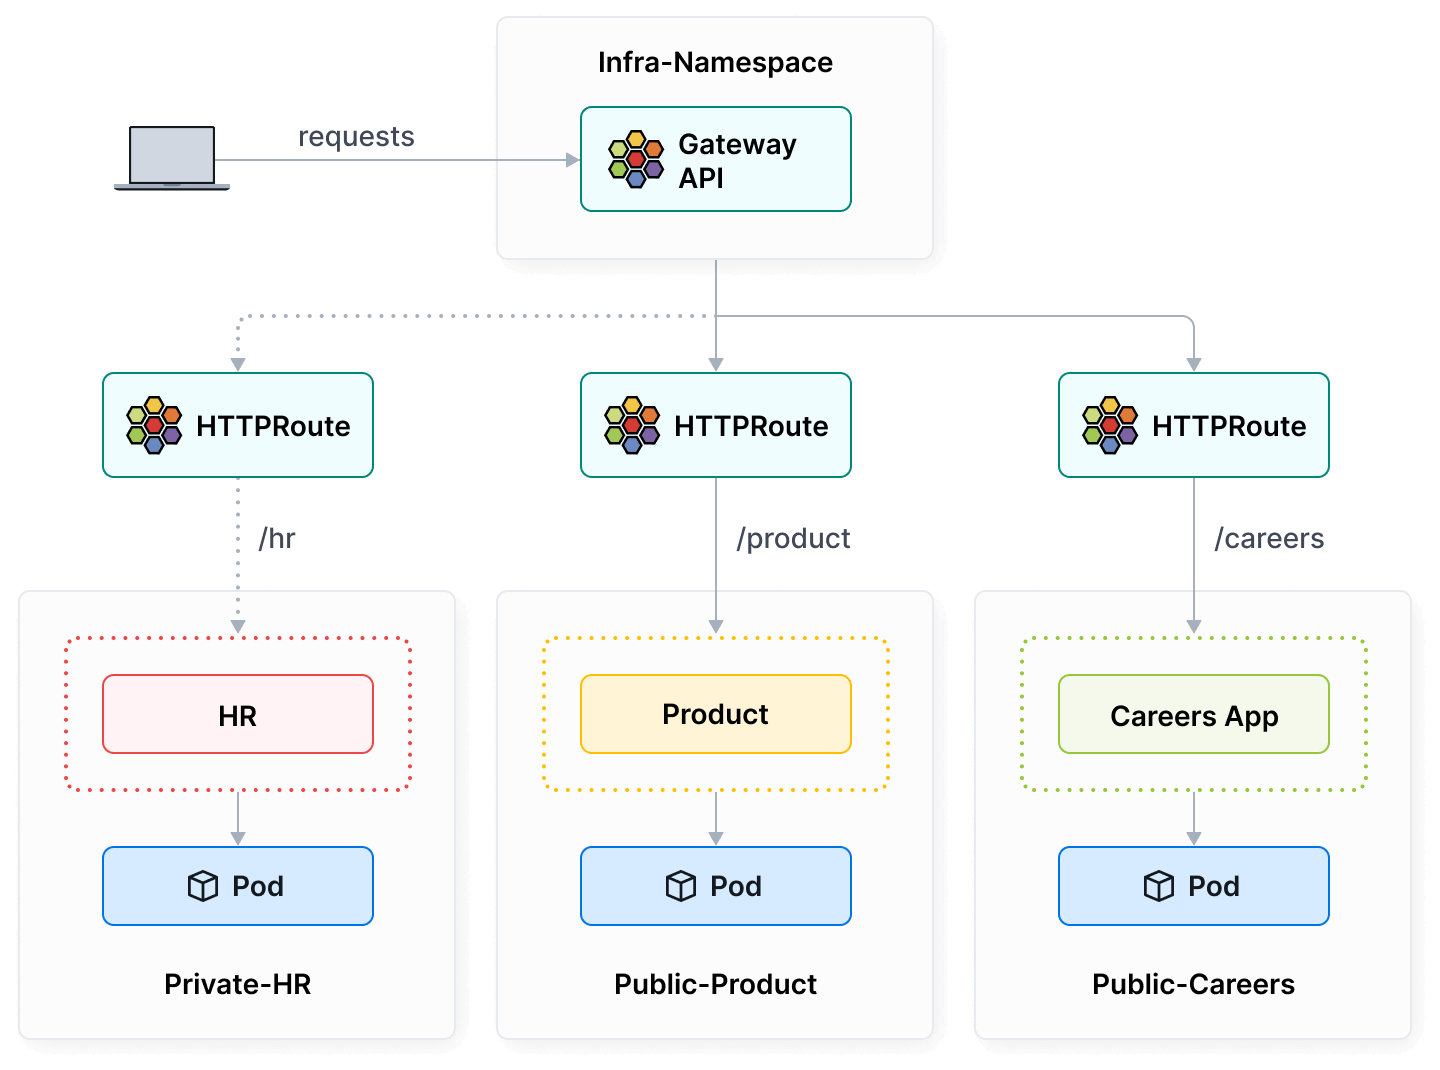 cilium gateway API TLS termination illustration